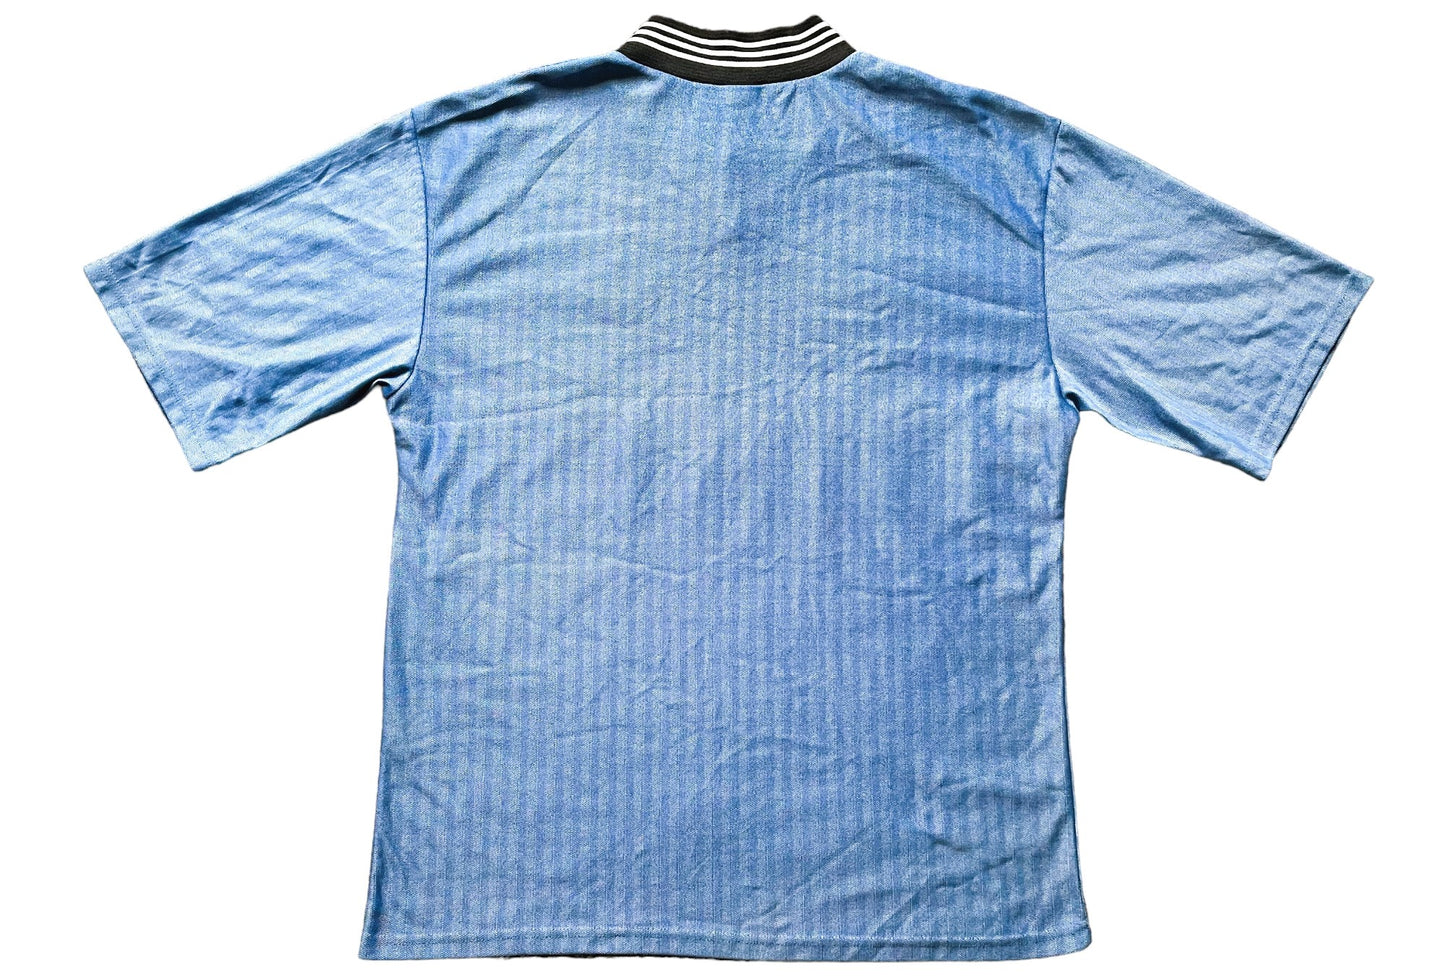 Newcastle 1996 Away Shirt (very good) Adults XL